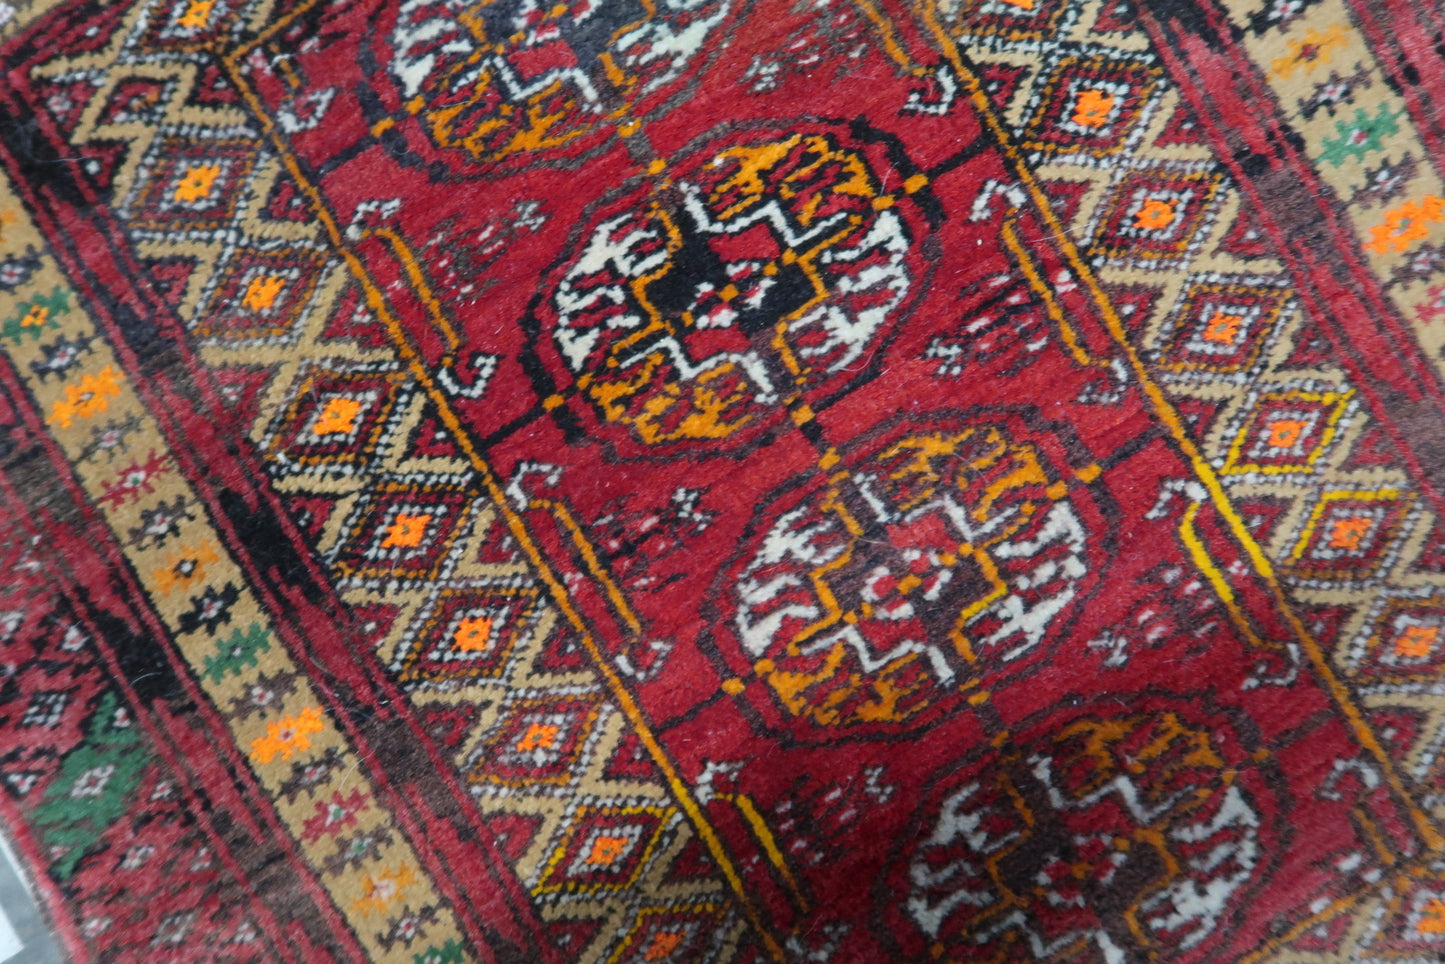 Intricate patterns and craftsmanship on the vintage Afghan Ersari mat